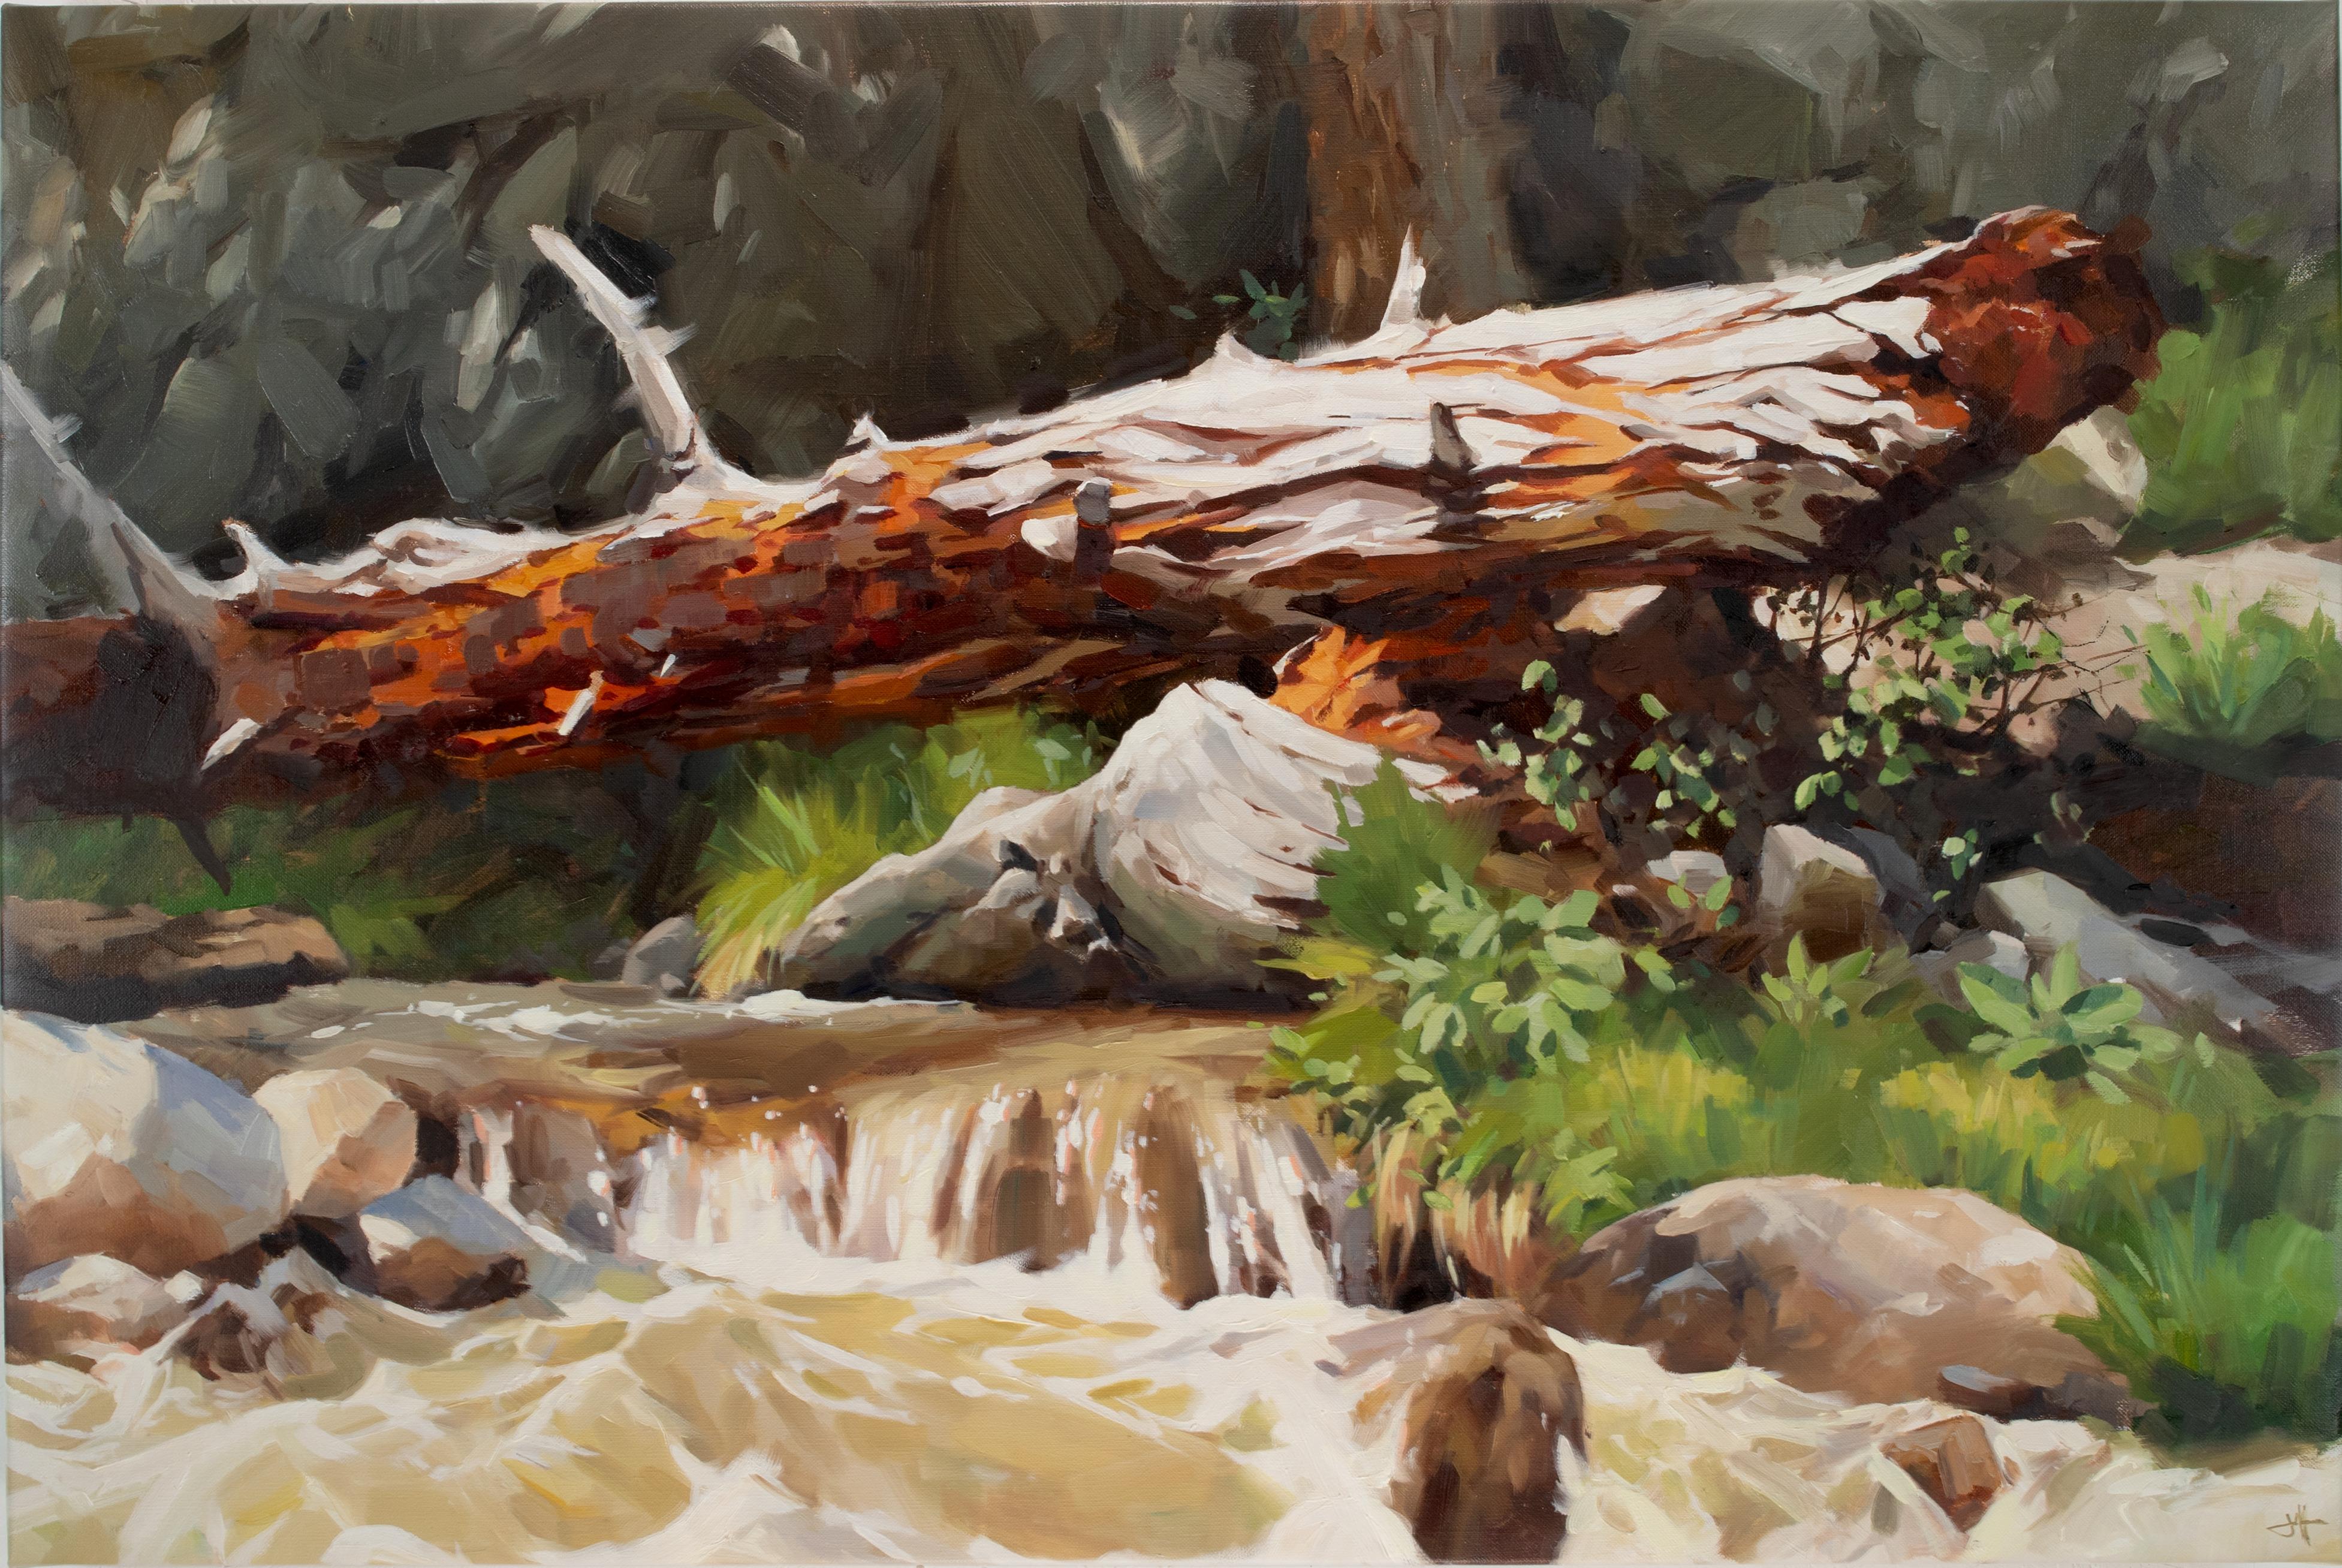 Judd Mercer Figurative Painting - "Summer Falls" Oil Painting